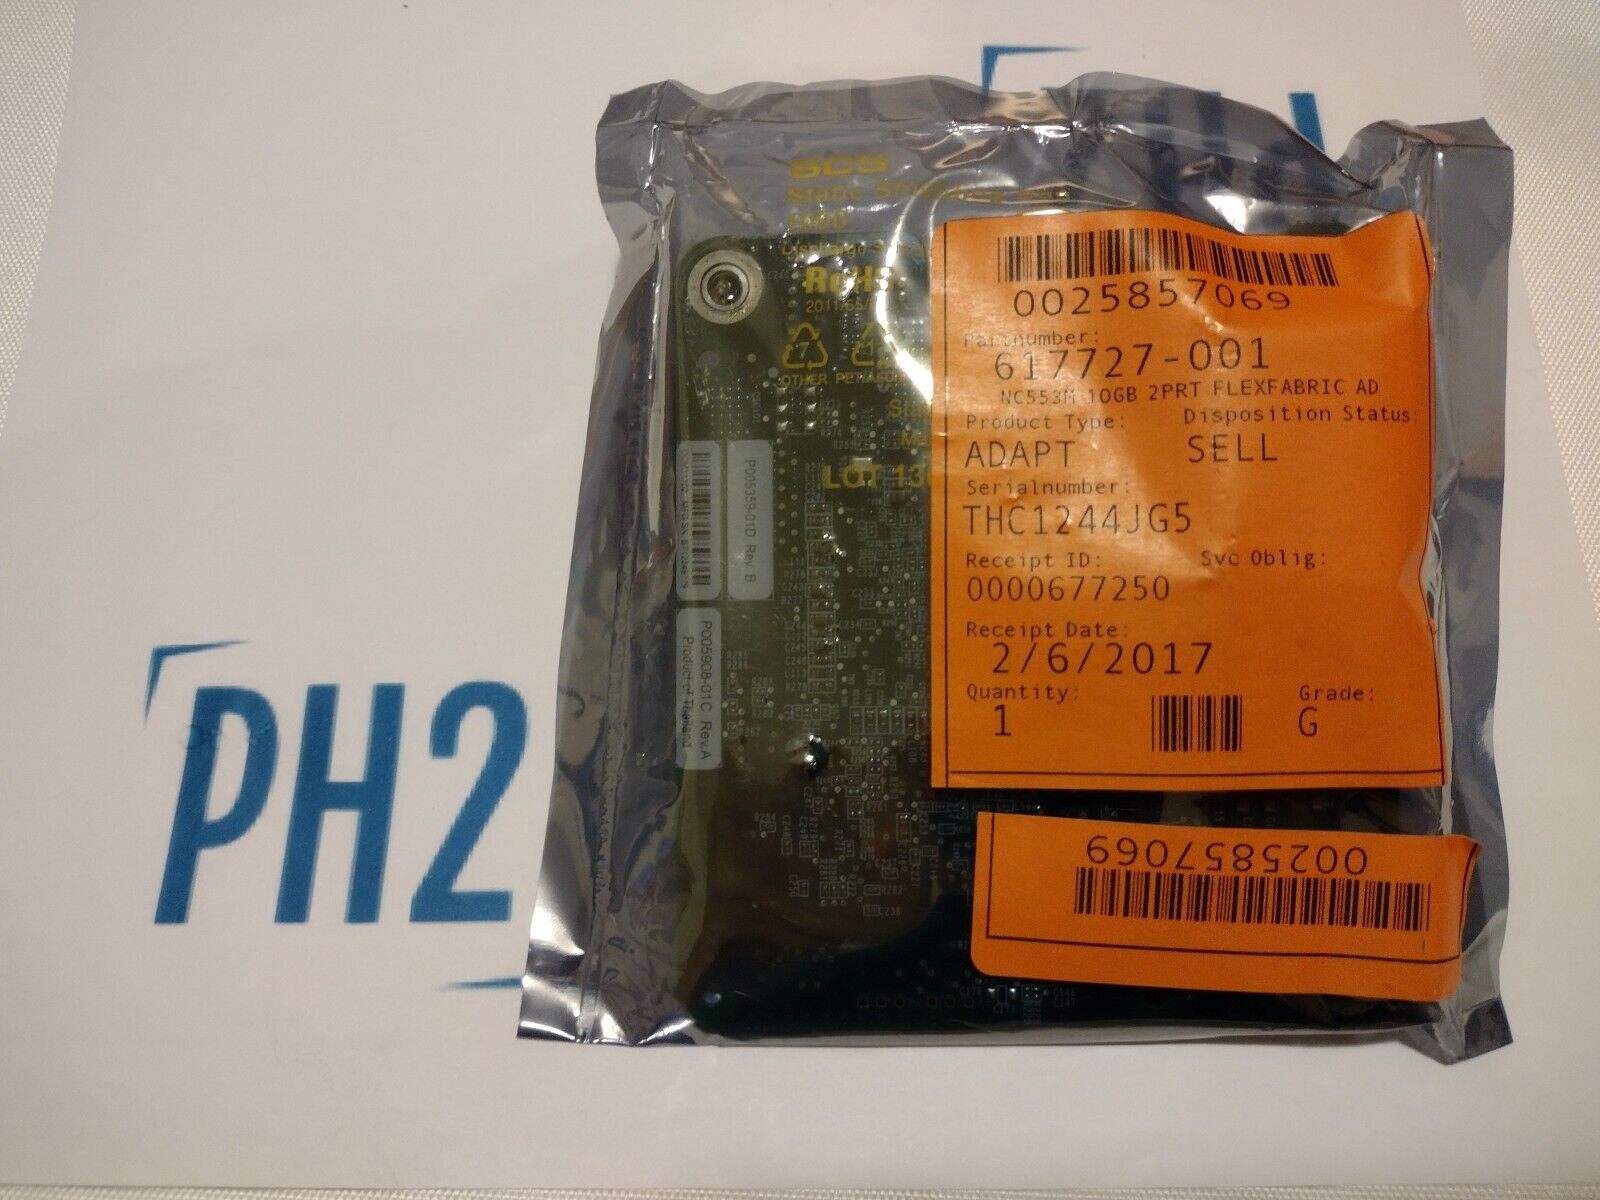 HPE 613431-B21 613433-001 617727-001 NC553m 10Gb 2-port FlexFabric Adapter